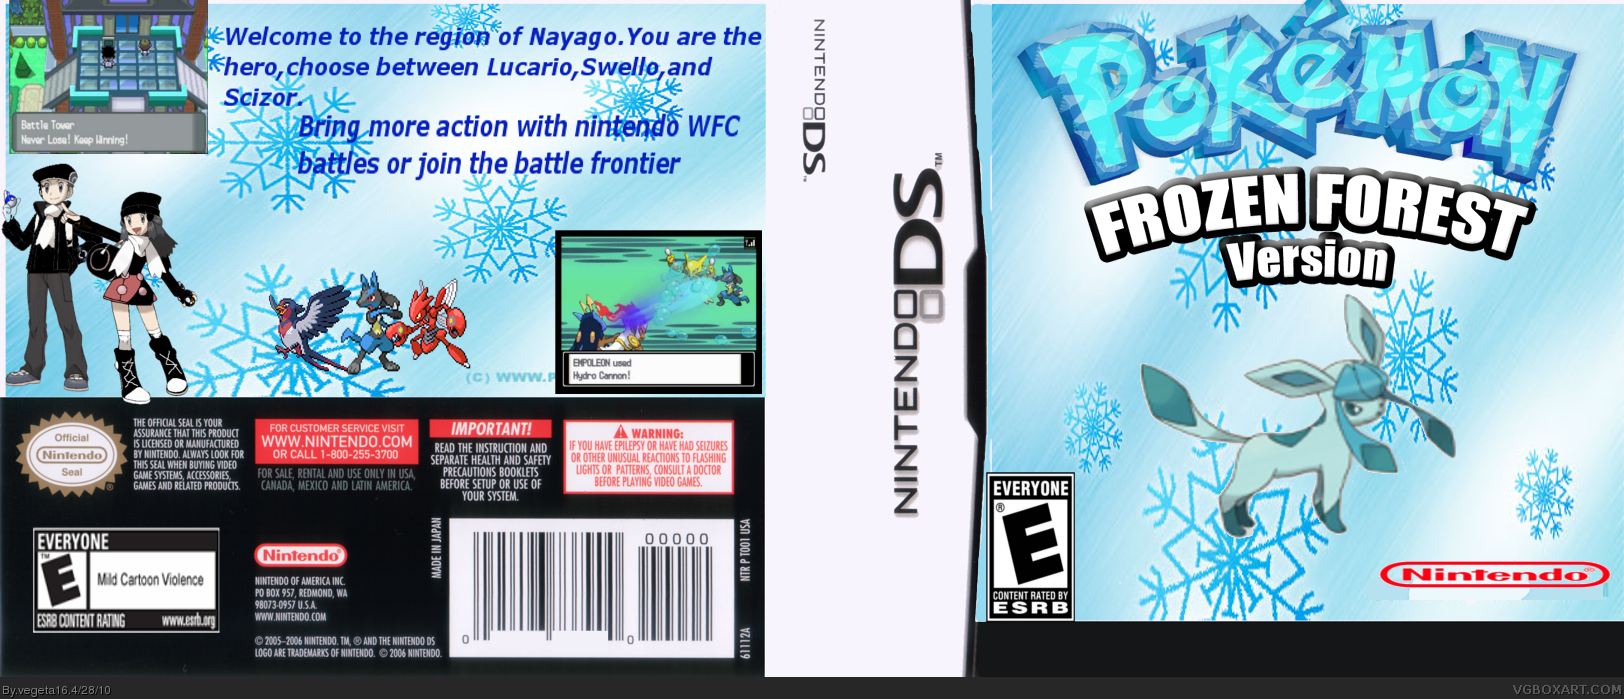 pokemon frozen forest version box cover